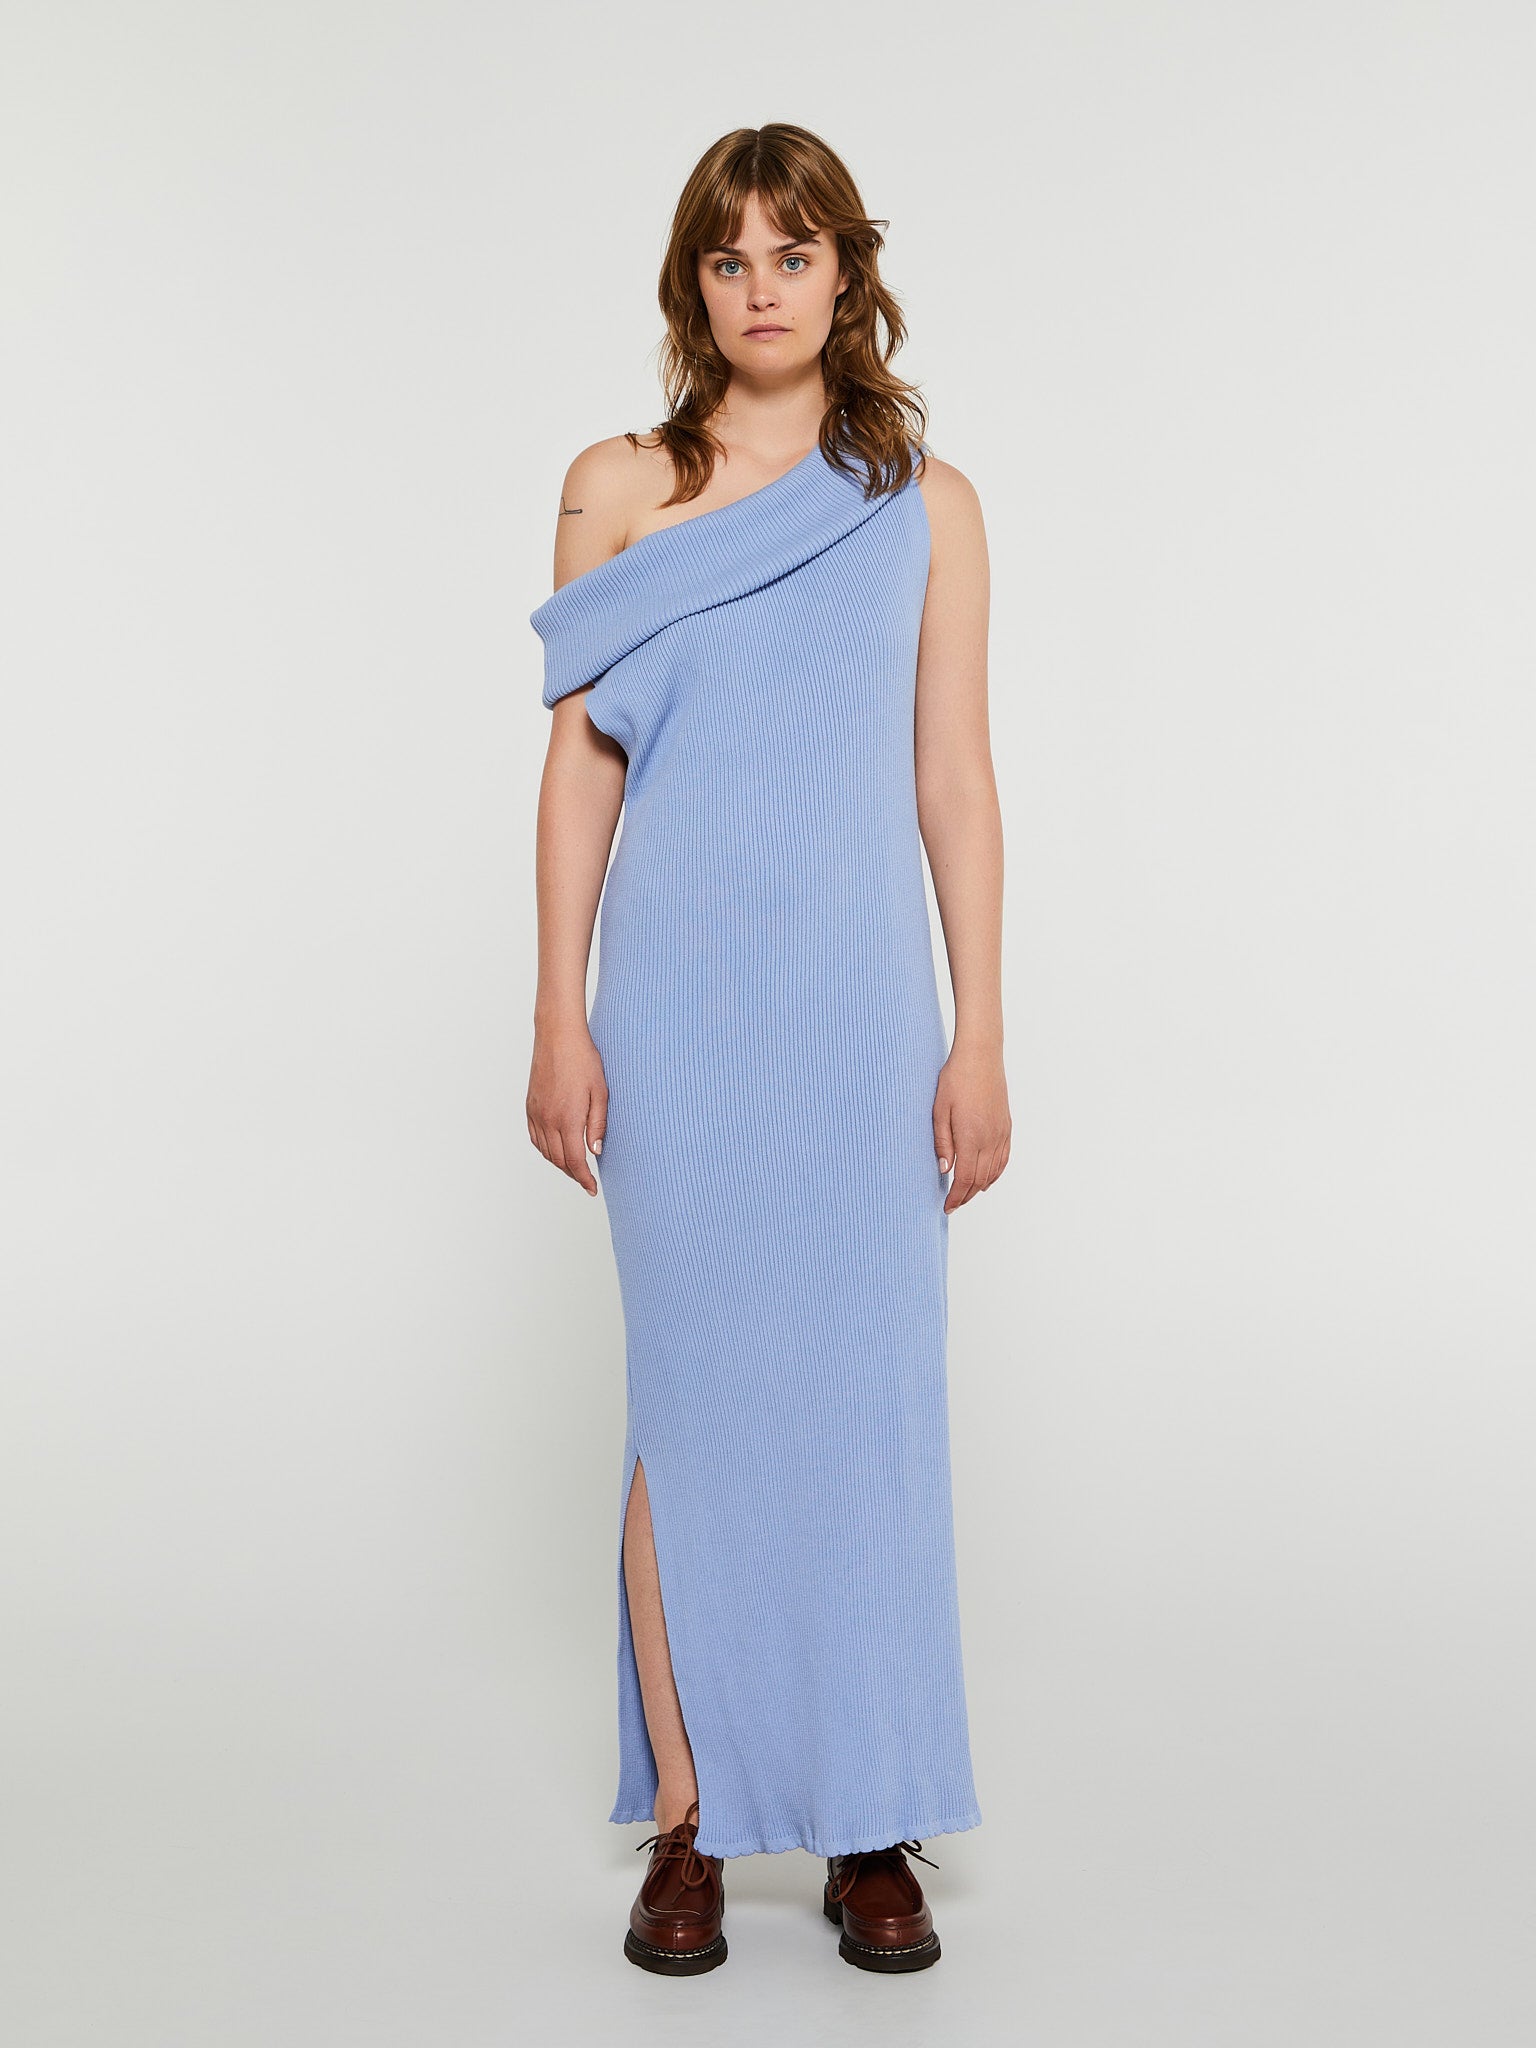 Proem Parades - Ellinor Knit Tube Dress in Light Blue